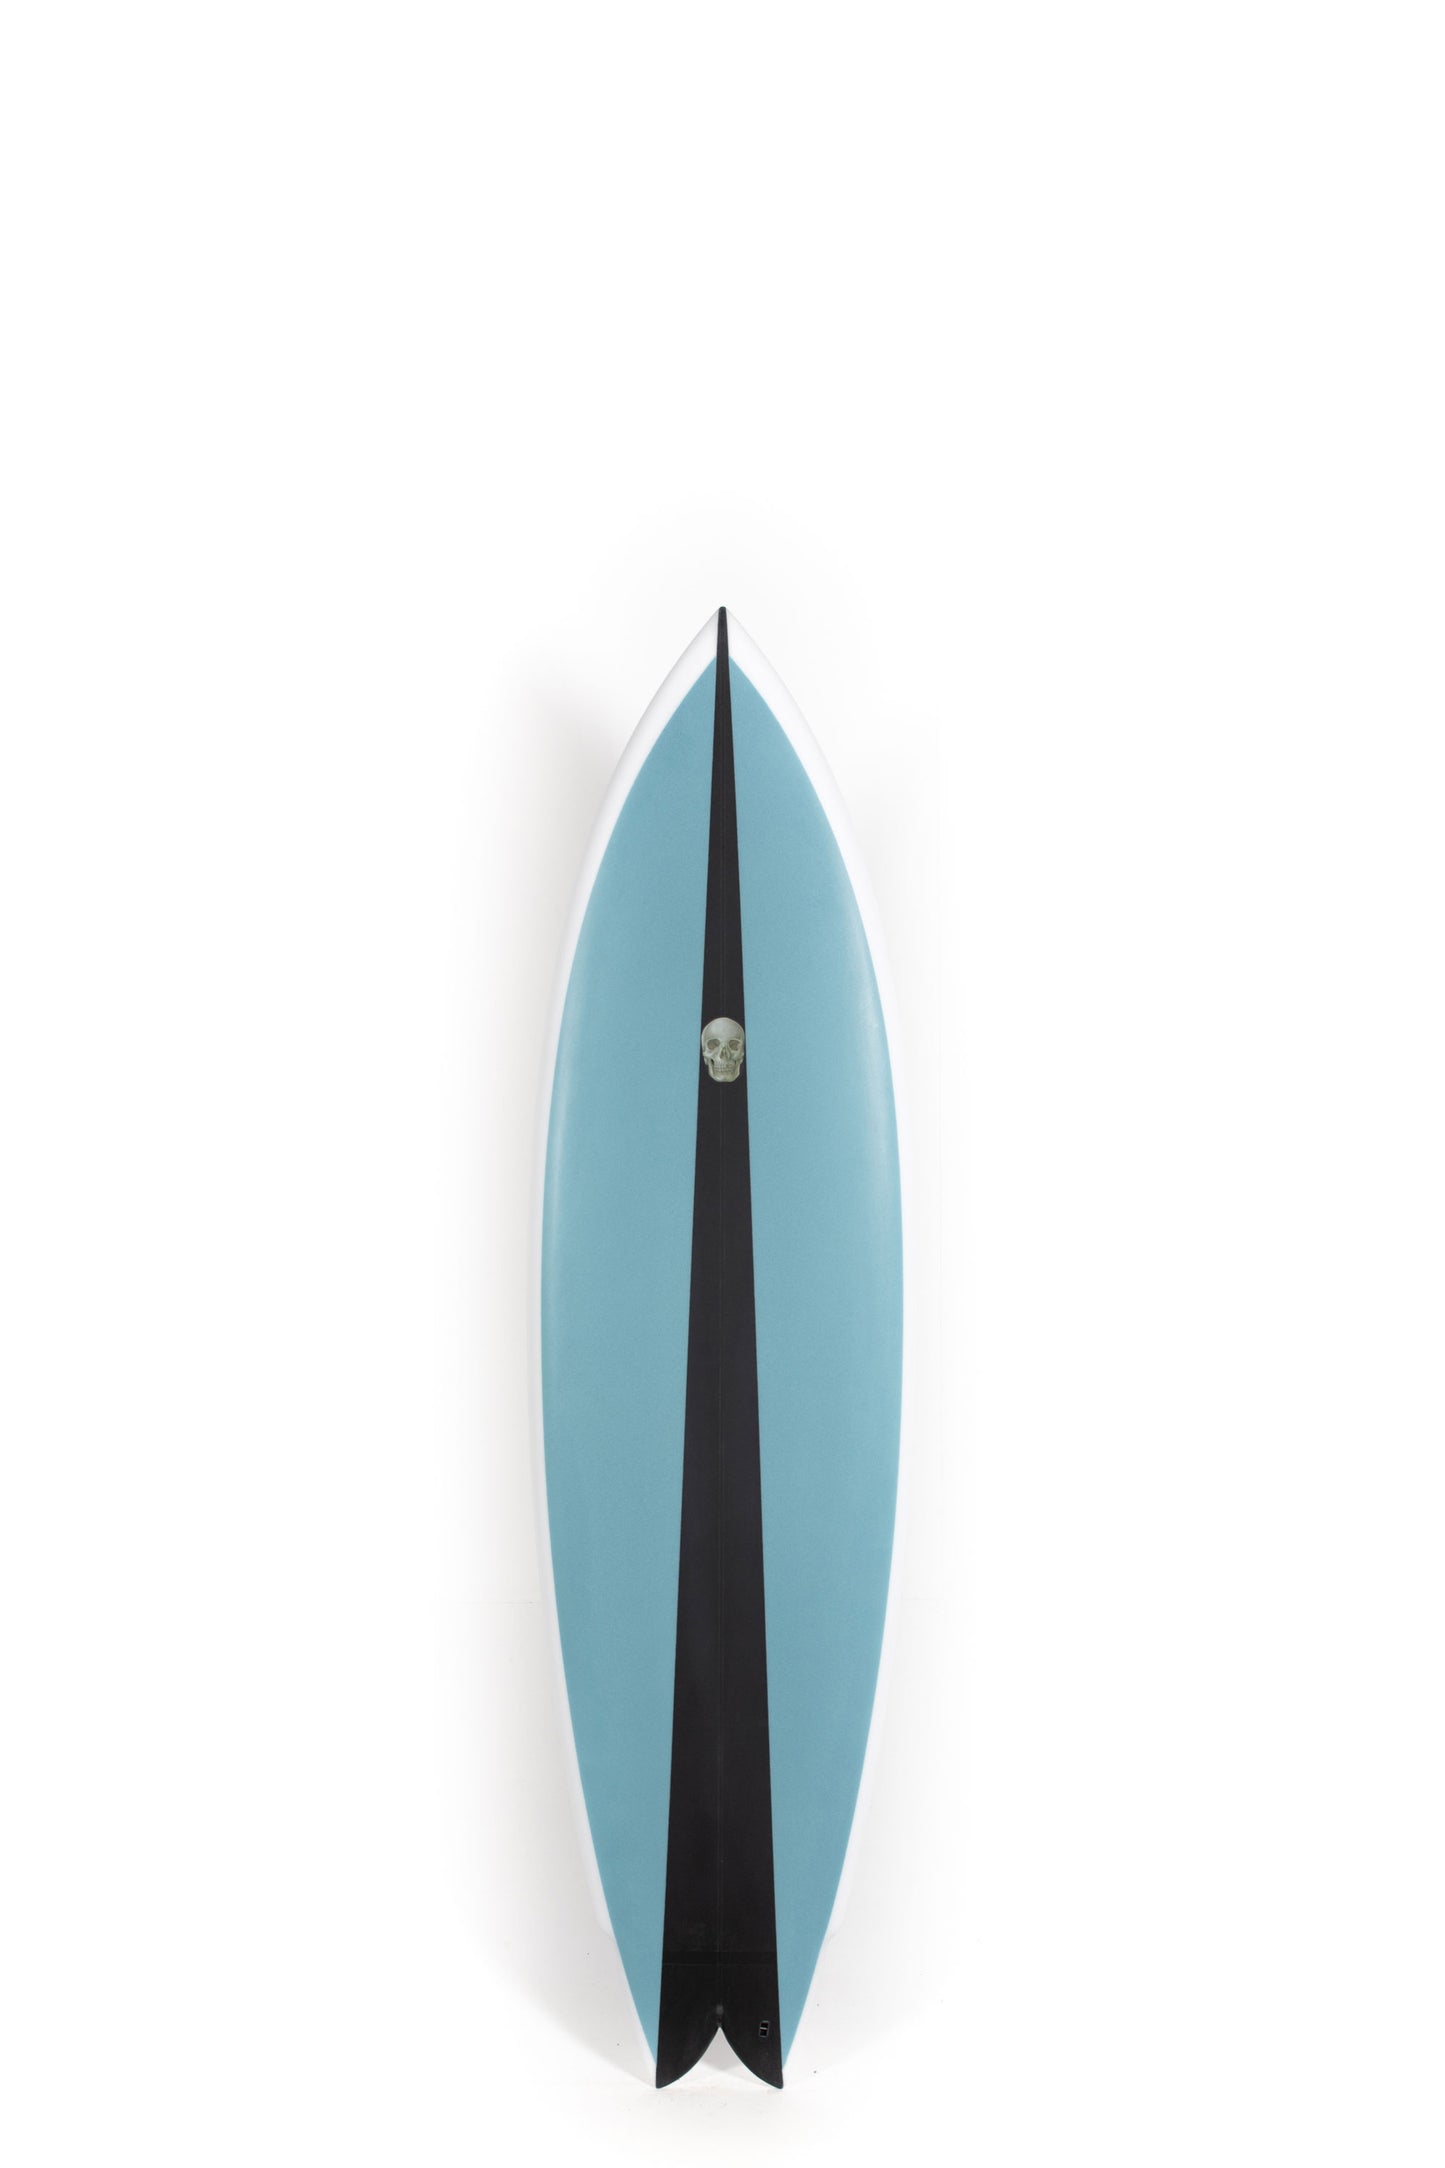 Pukas Surf Shop - Christenson Surfboard  - WOLVERINE by Chris Christenson - 6’6 20 3/4 x 2 5/8